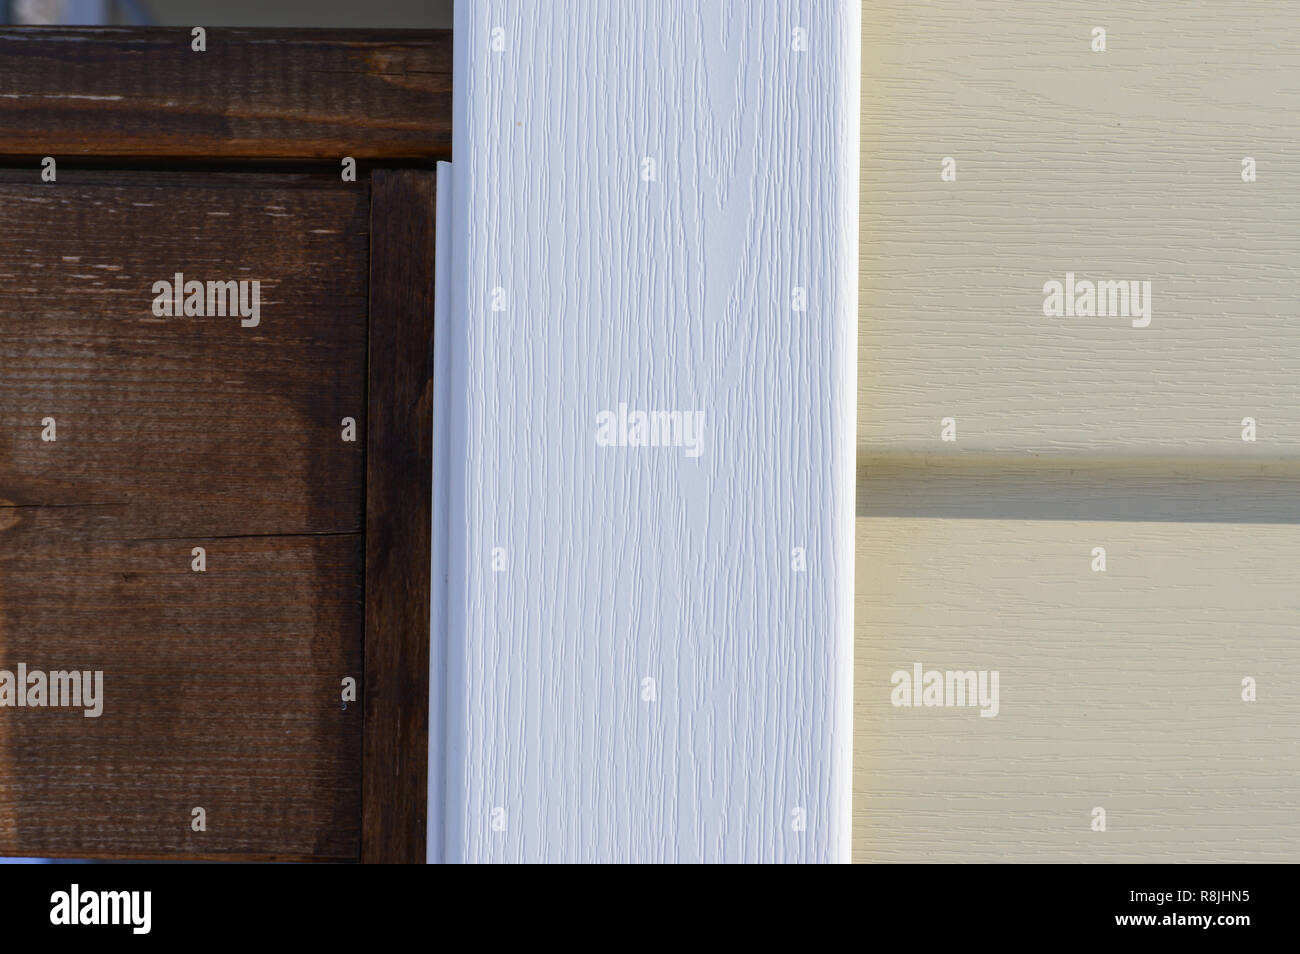 Vinyl Siding Furniture For Exterior Wall Cladding Texture